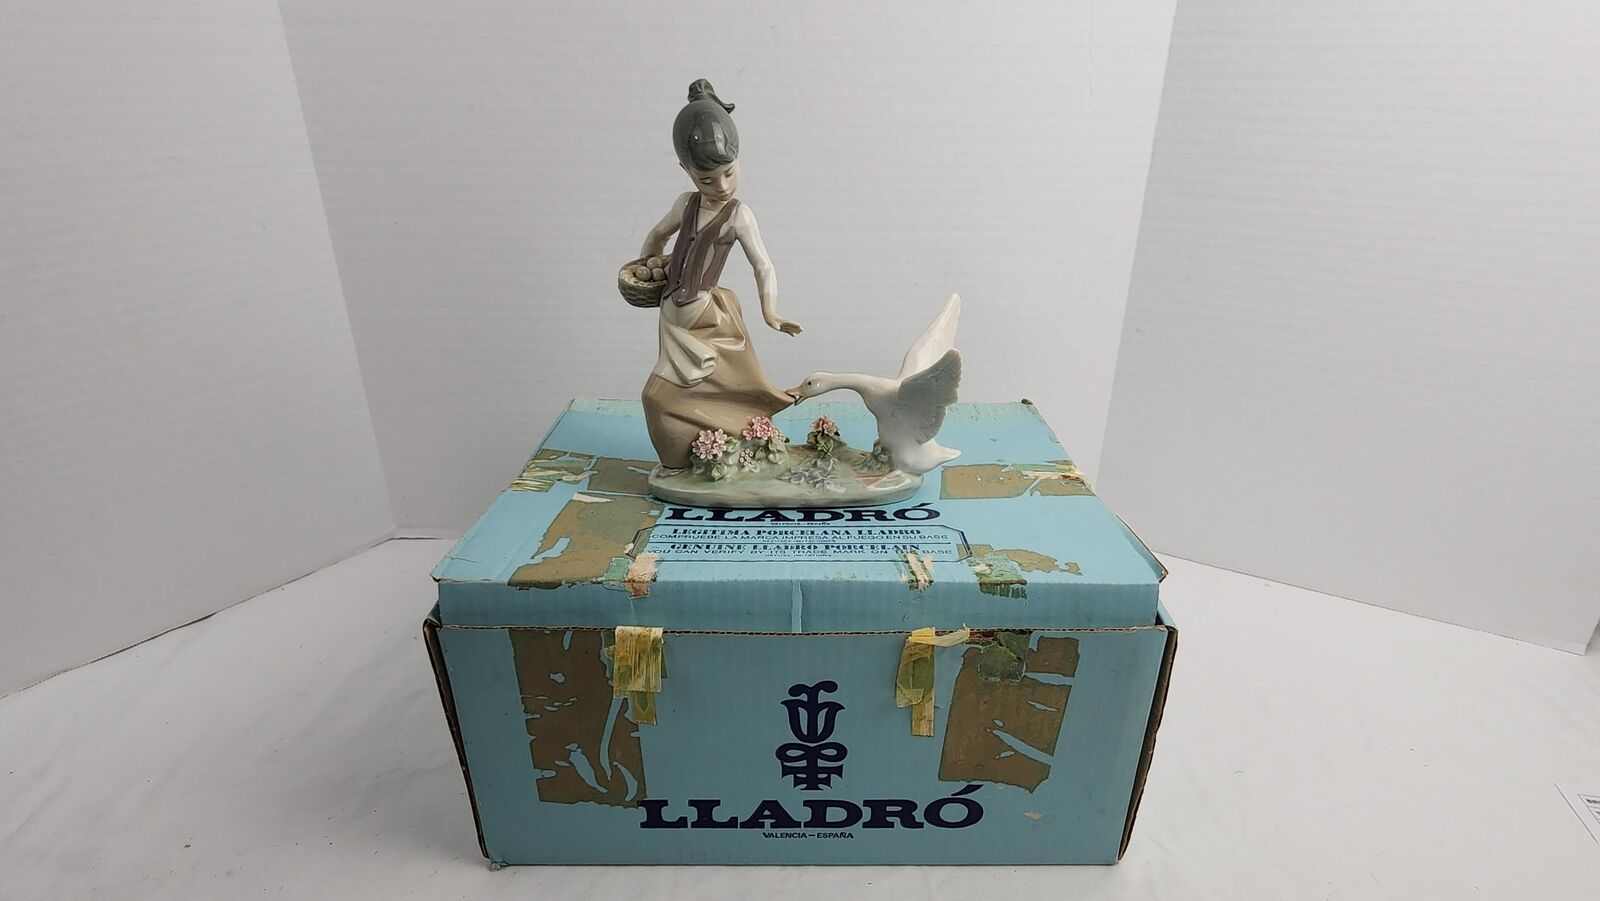 Lladro Aggressive Goose/Ola Agresiva Porcelain Statue w/ Box - Complete, Spain